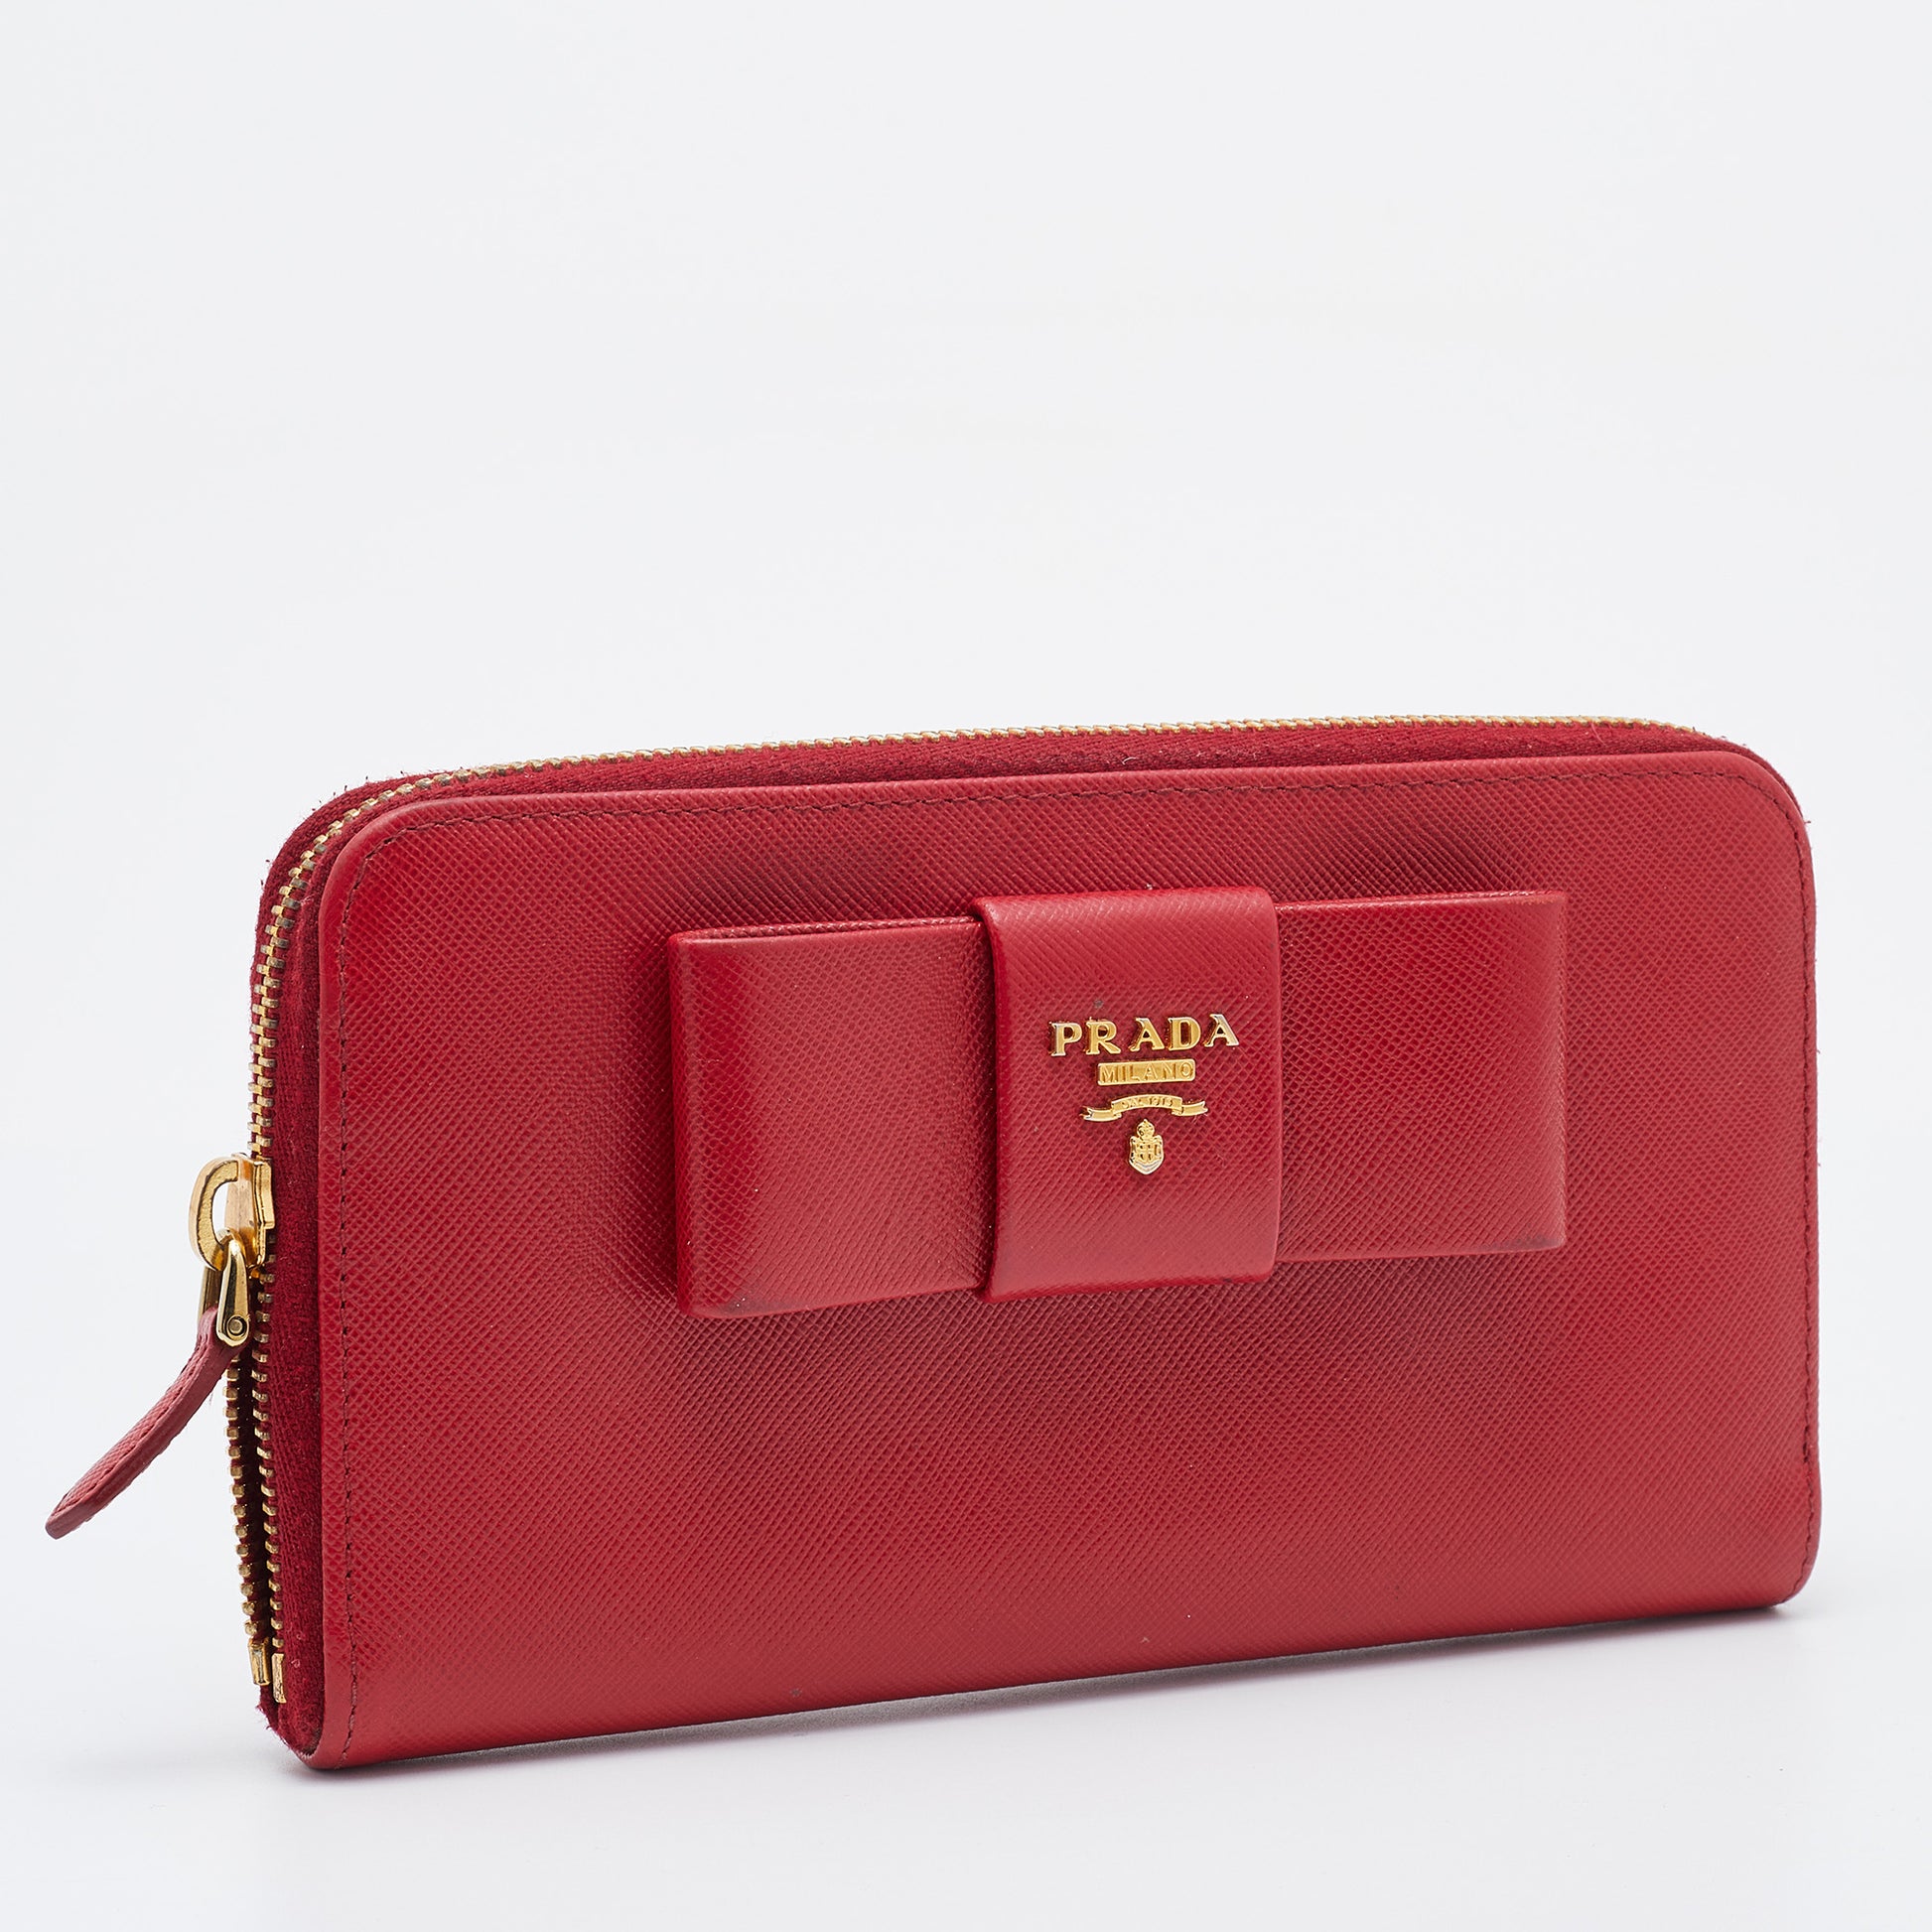 Prada Red Saffiano Leather Bow Zip Around Wallet